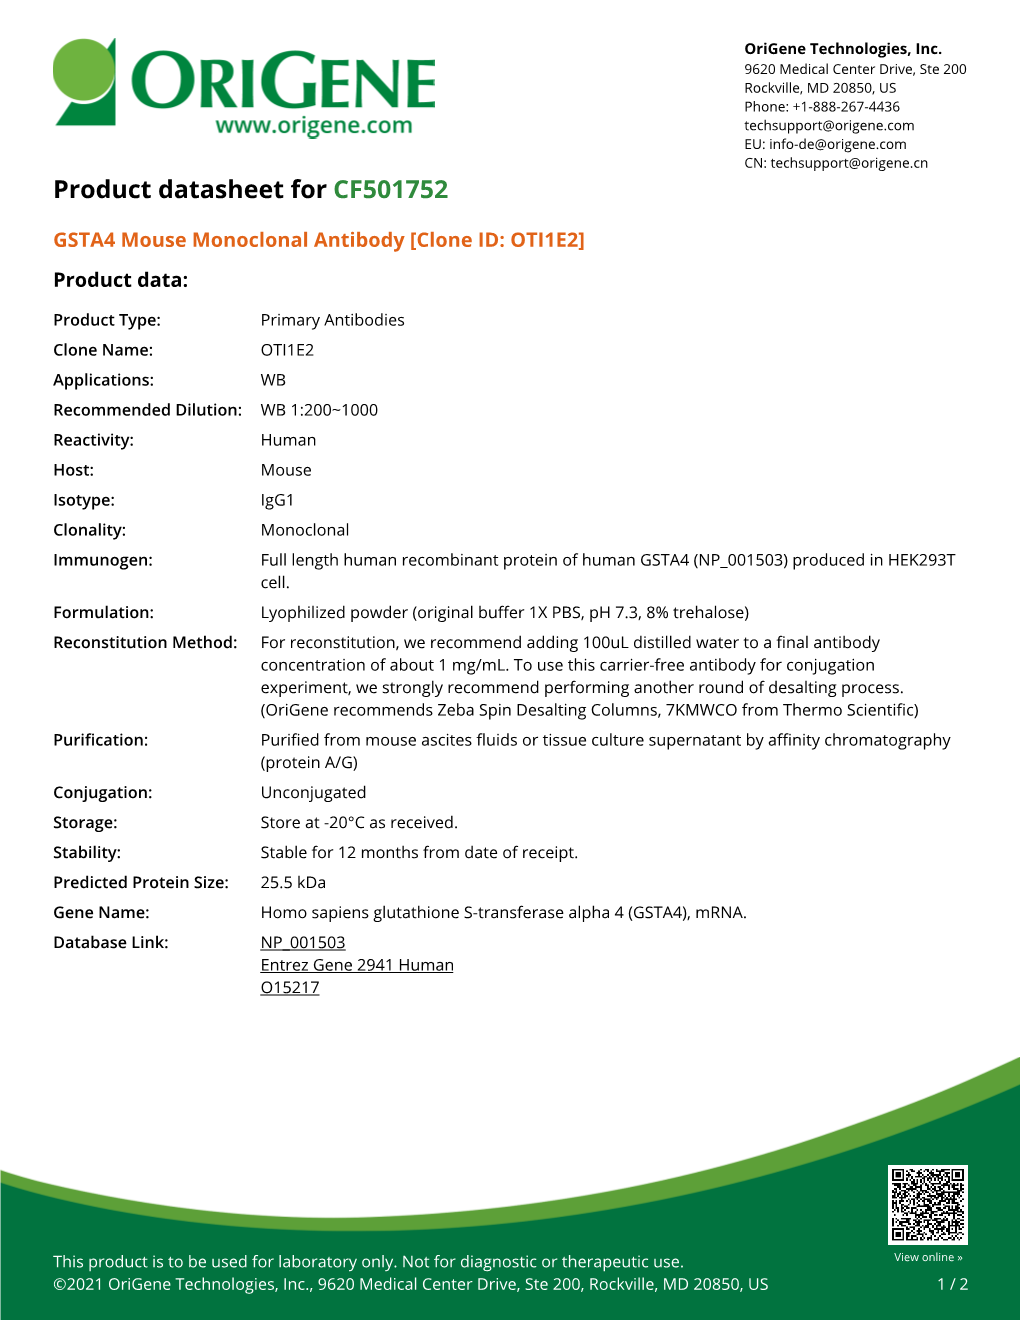 GSTA4 Mouse Monoclonal Antibody [Clone ID: OTI1E2] Product Data